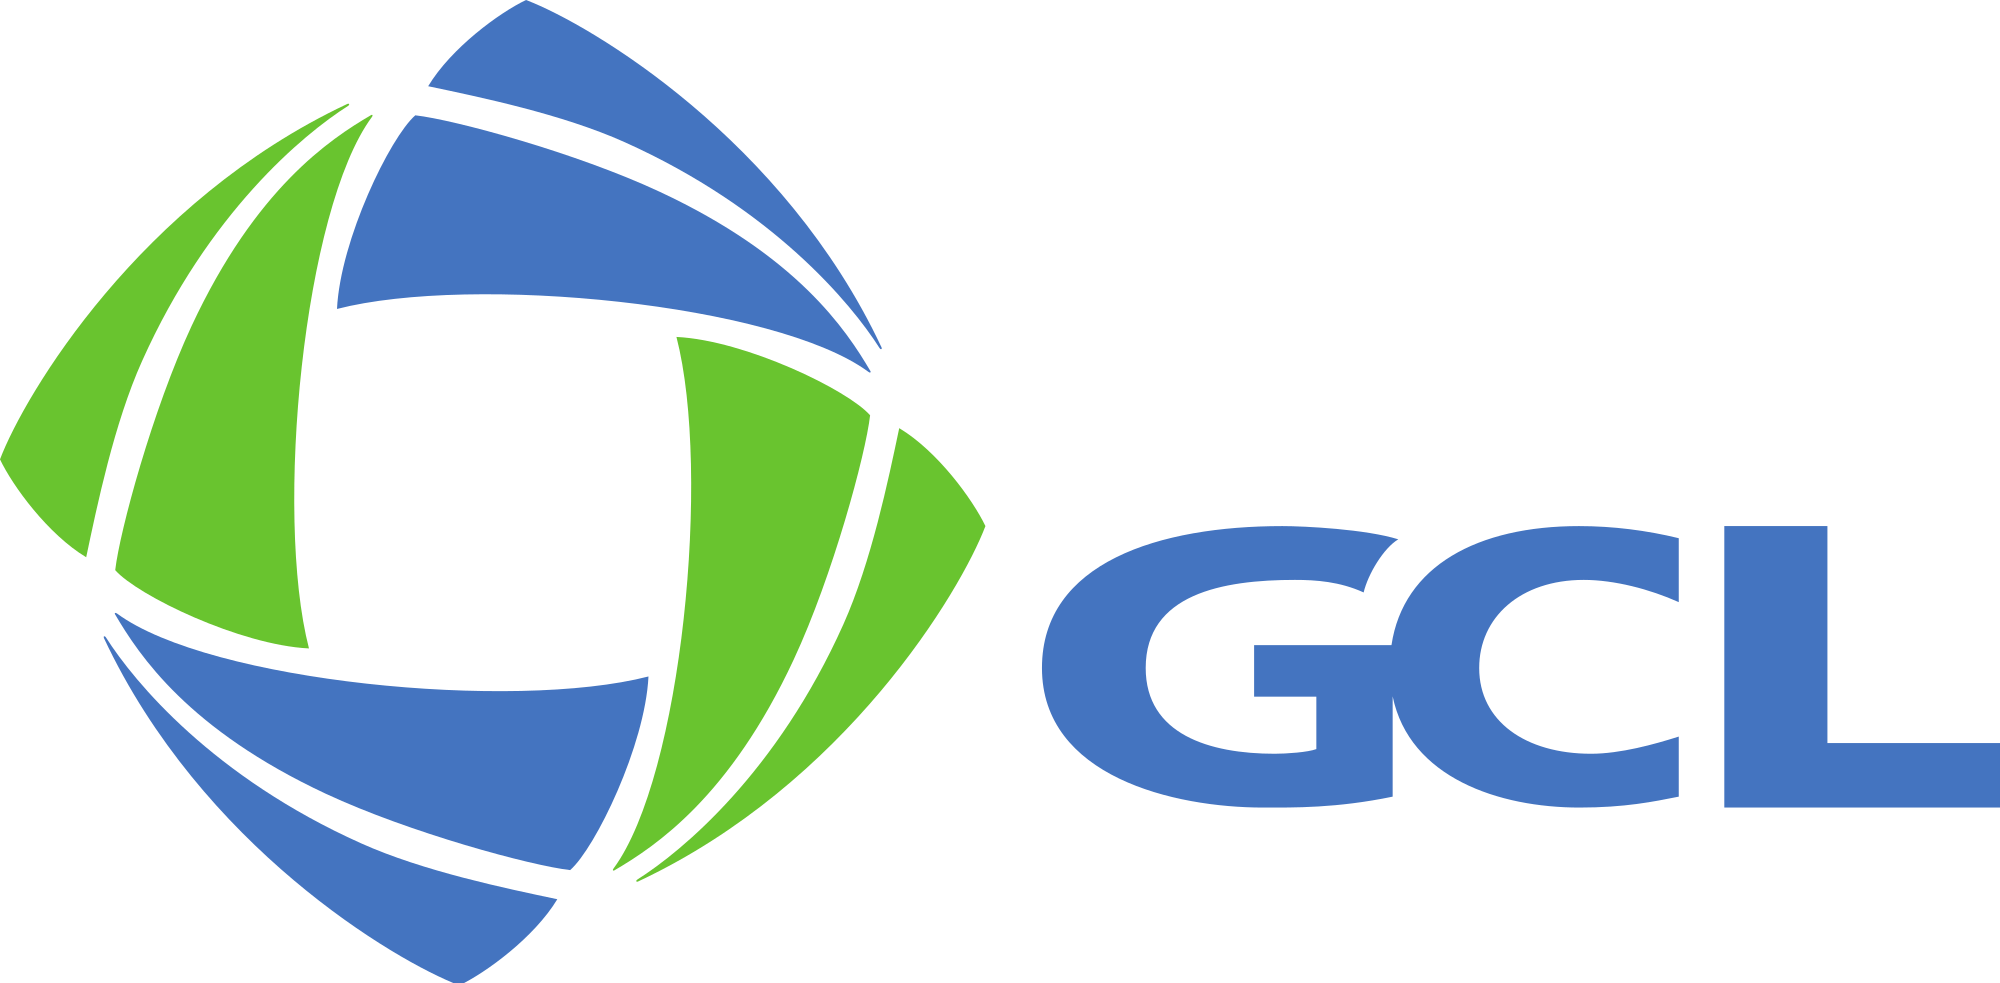 GCL Logo - GCL-Poly